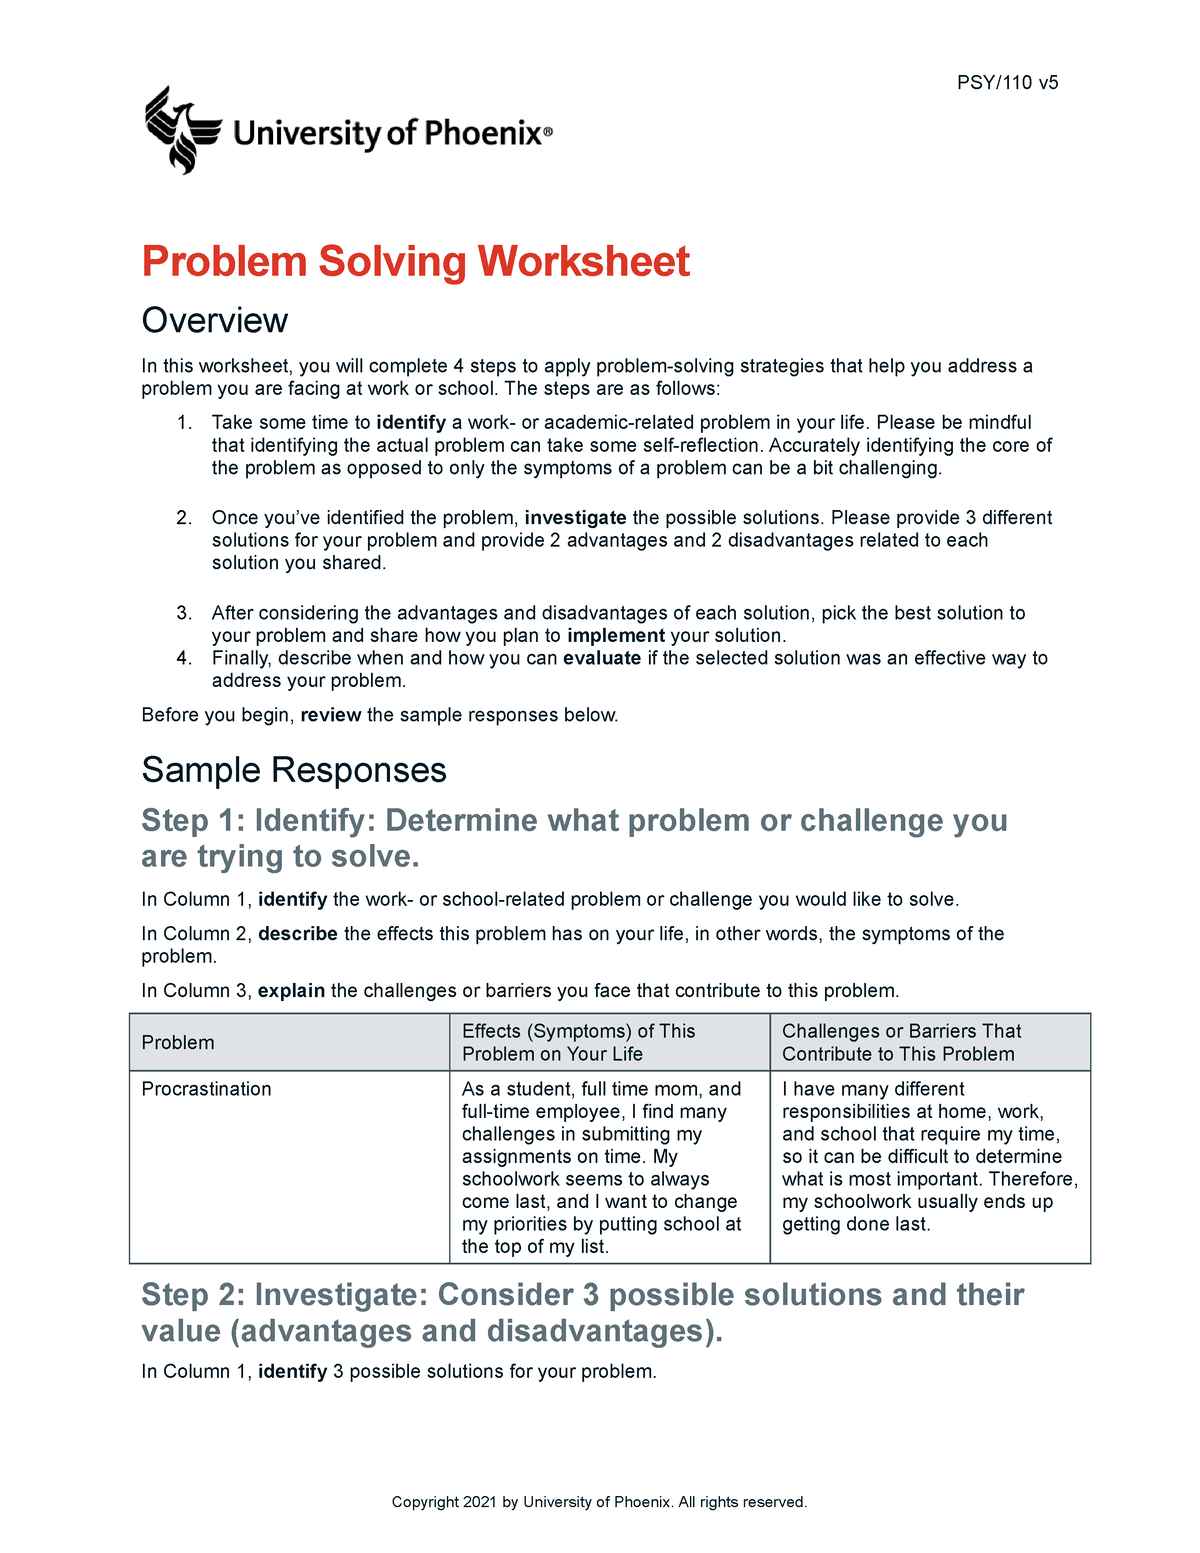 problem solving worksheet university of phoenix